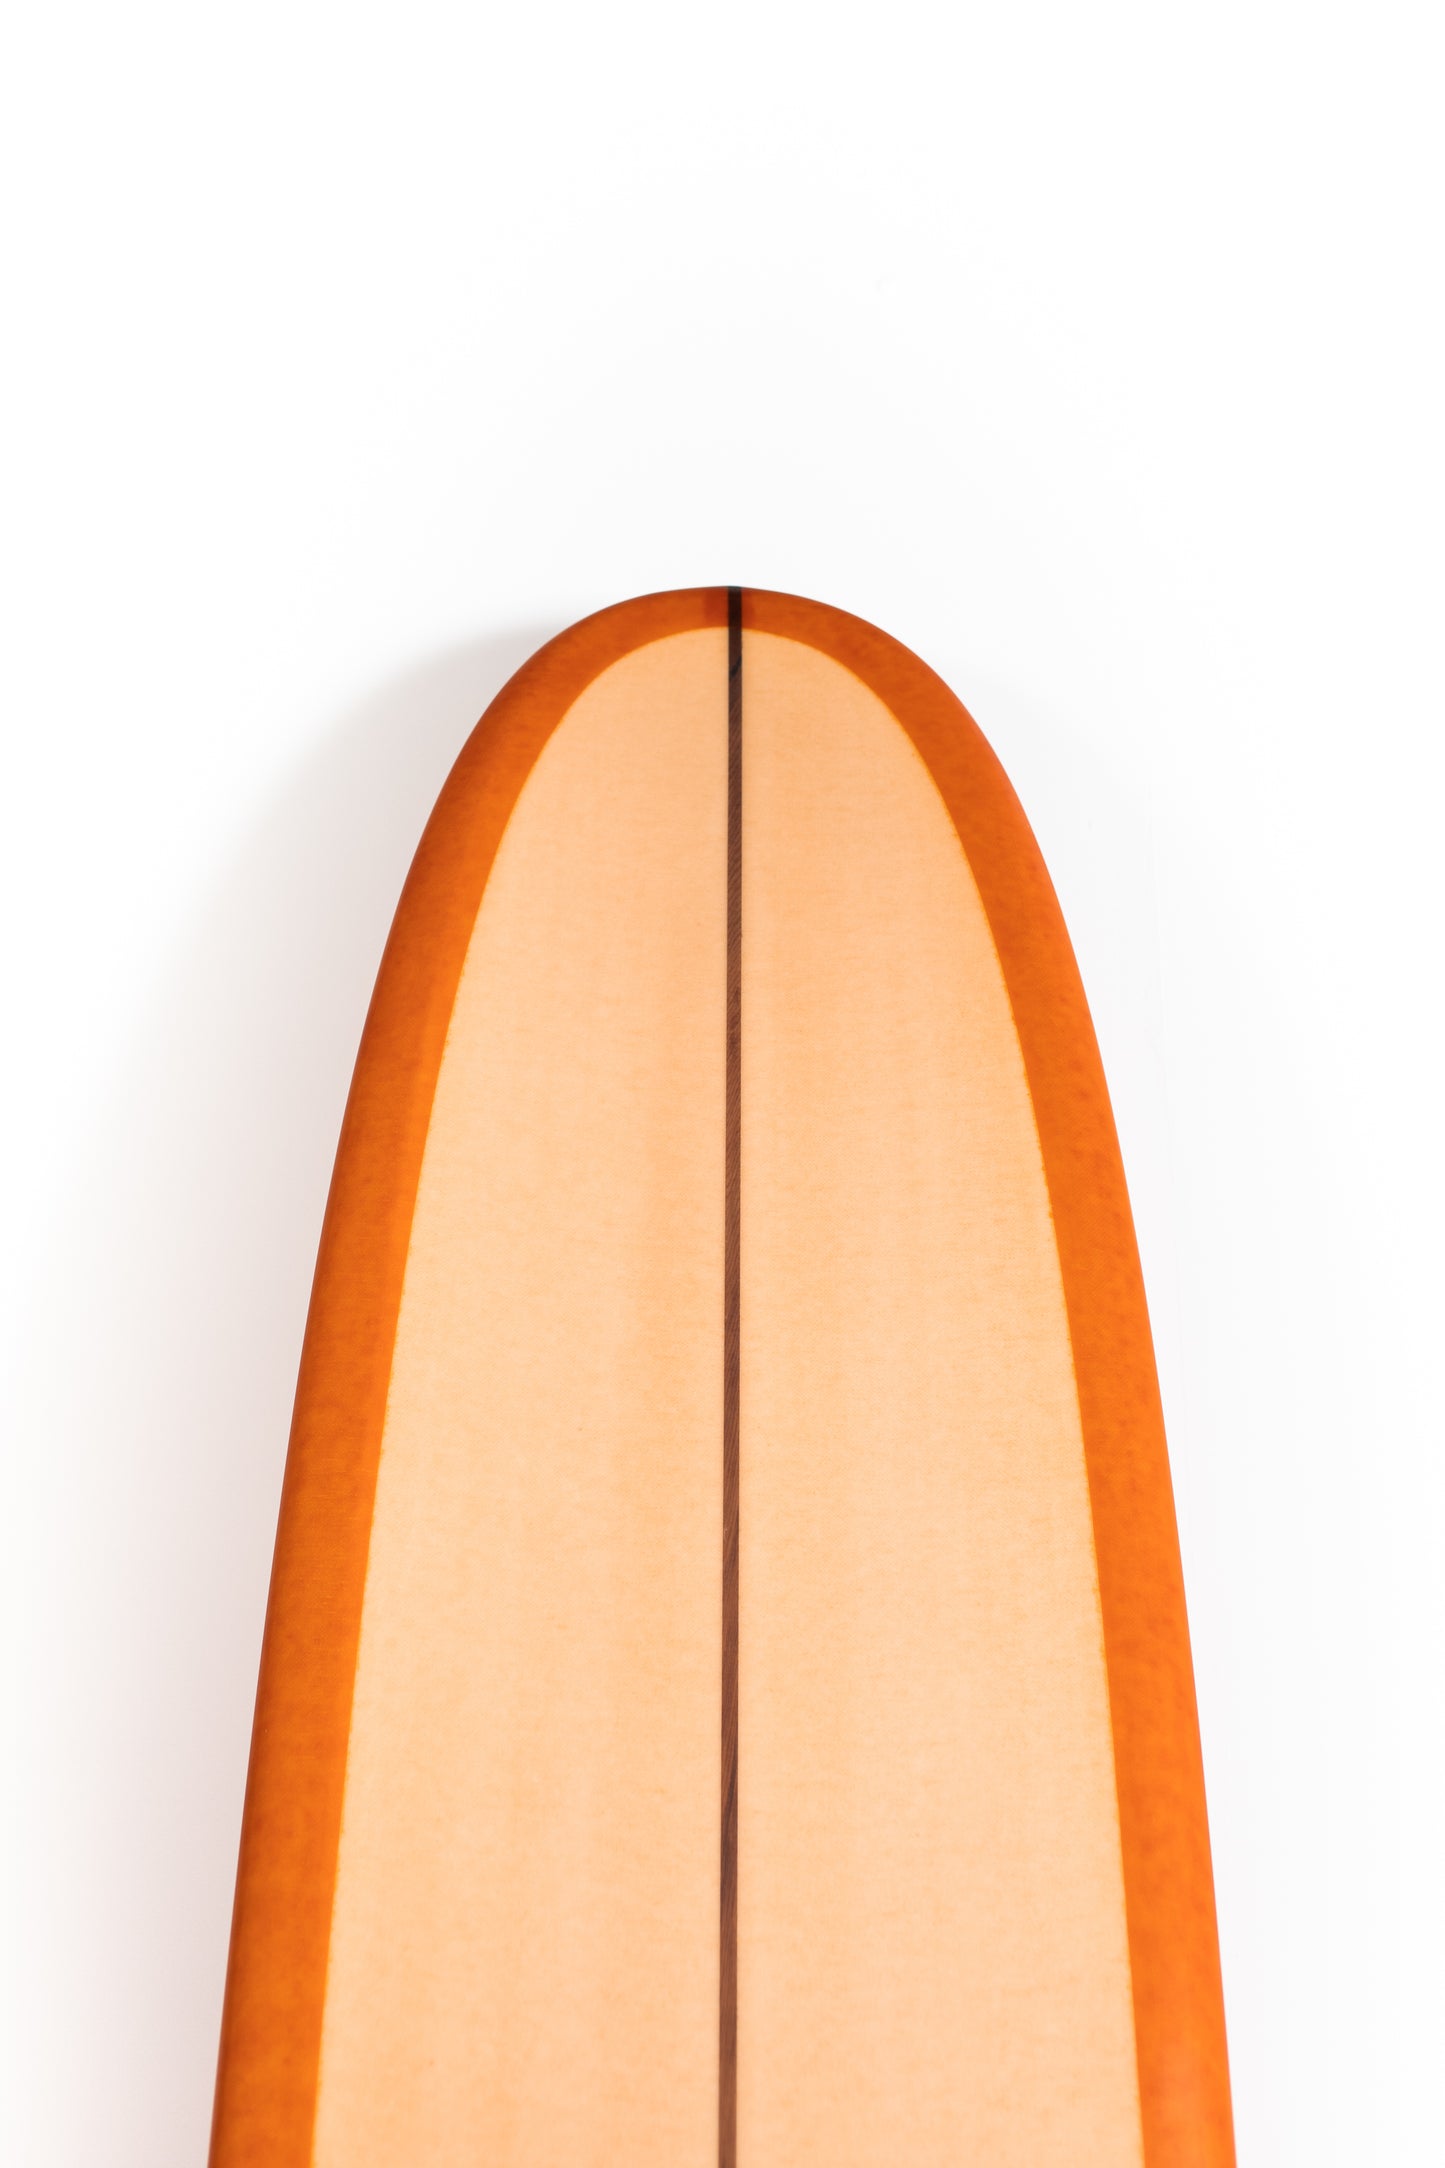 
                  
                    Pukas Surf Shop - Pukas Surfboards - MAYFLOWER by Axel Lorentz -  9'4" x 22,88 x 3,06 x 76.71L - AX09728
                  
                